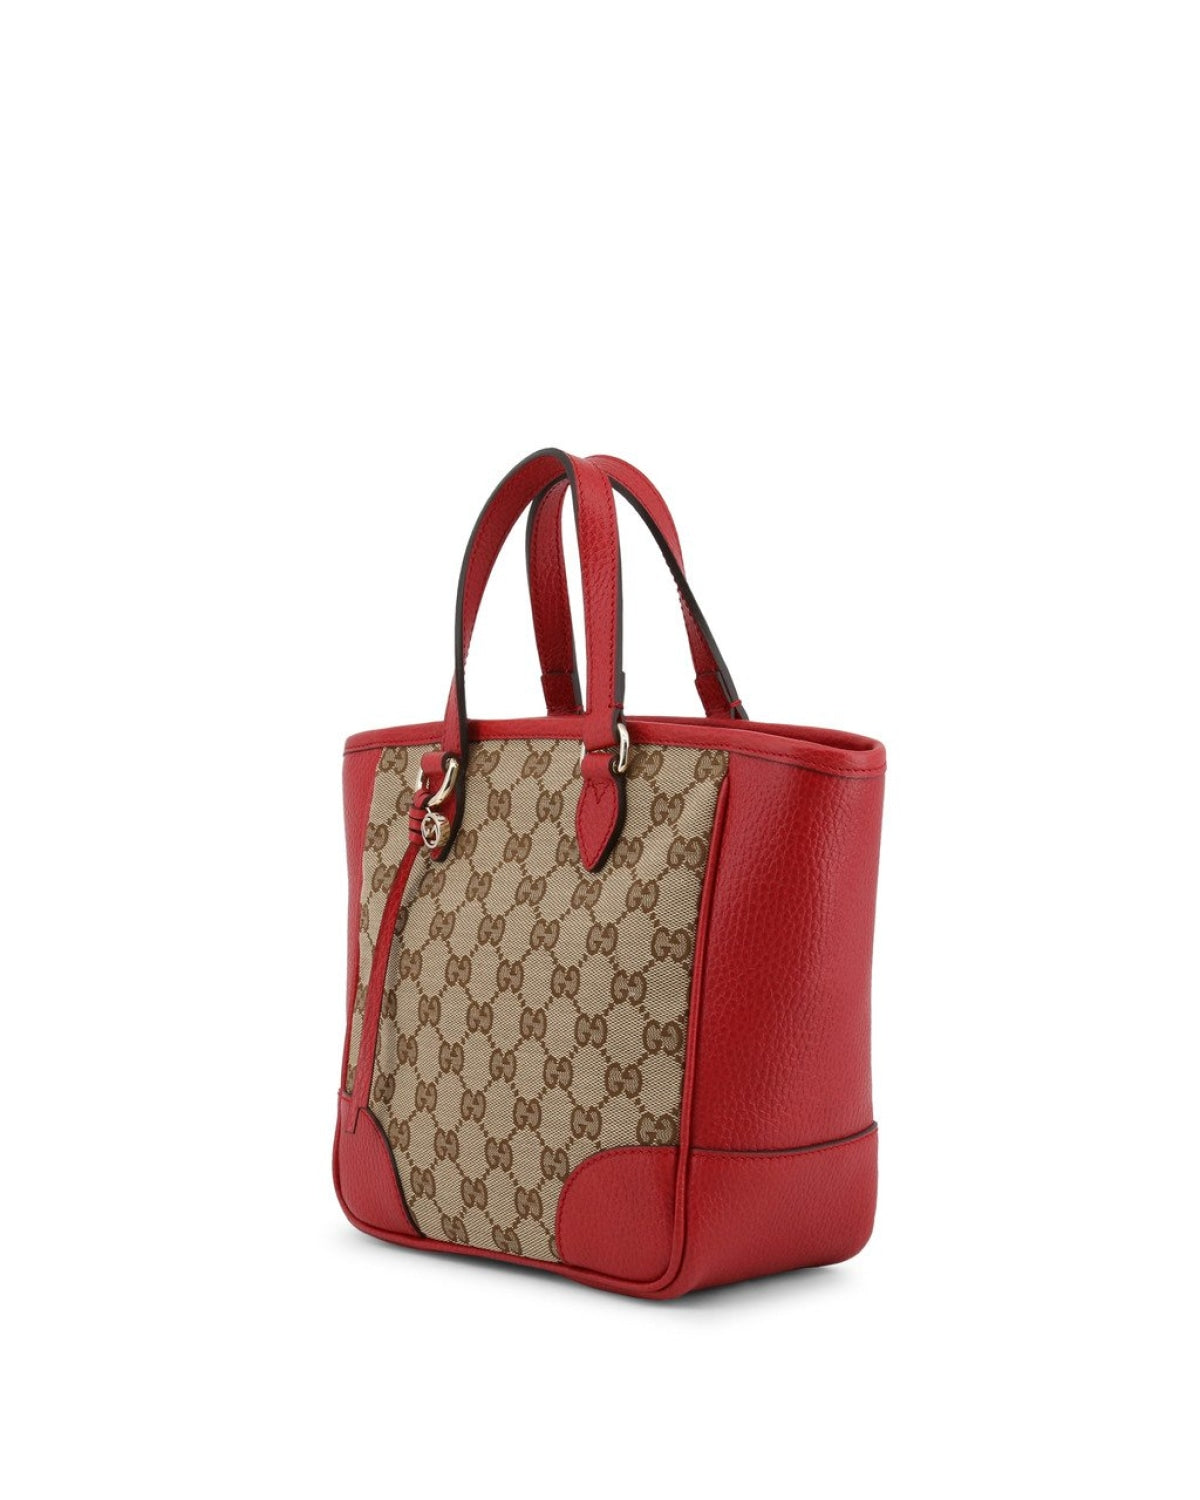 Gucci - 449241_KY9LG - Bags Handbags